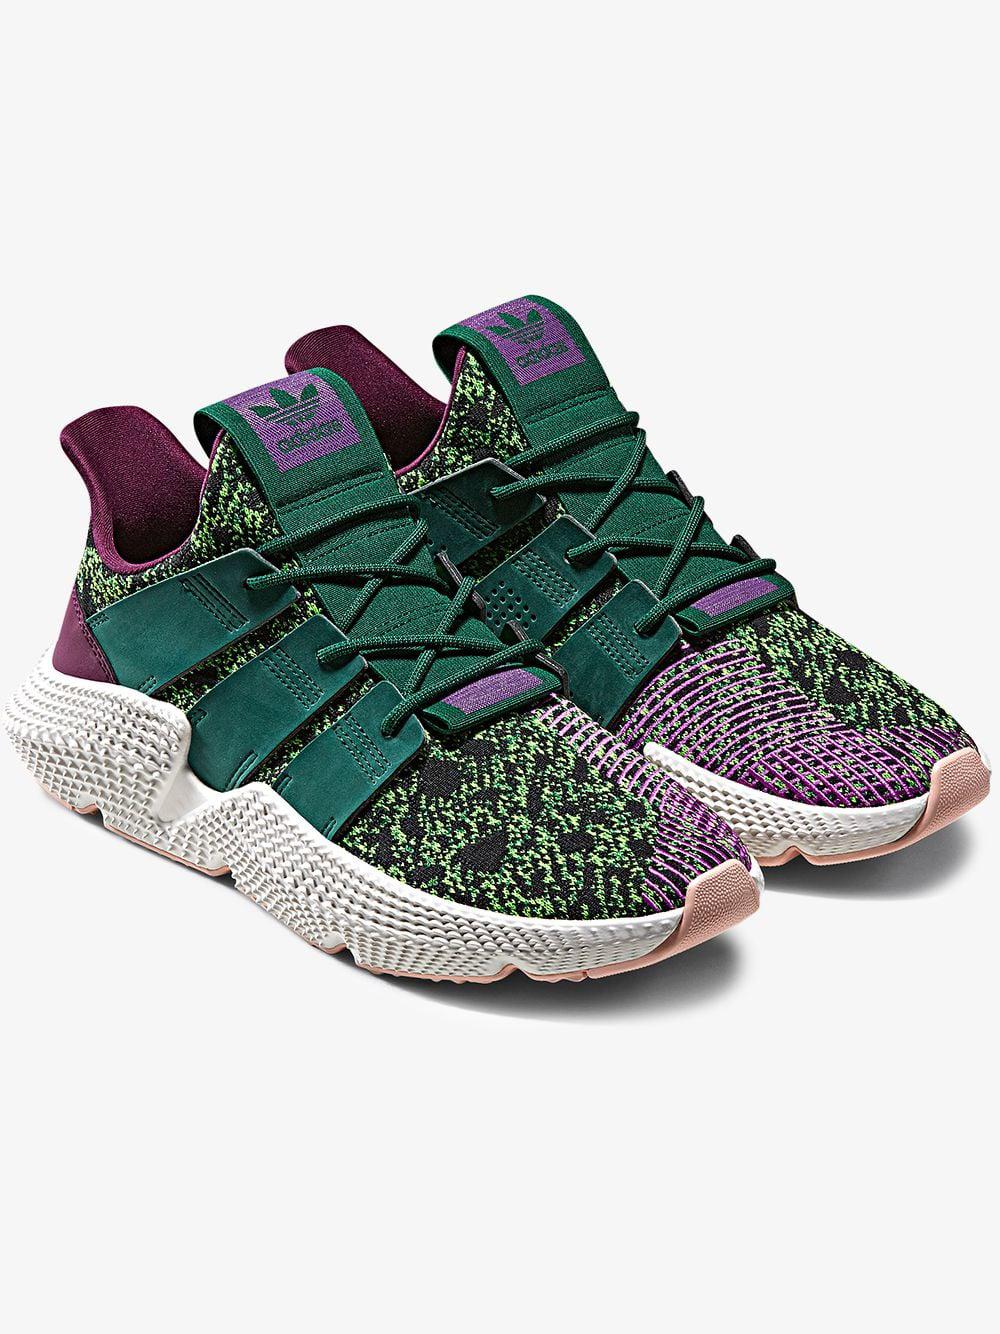 adidas green and purple